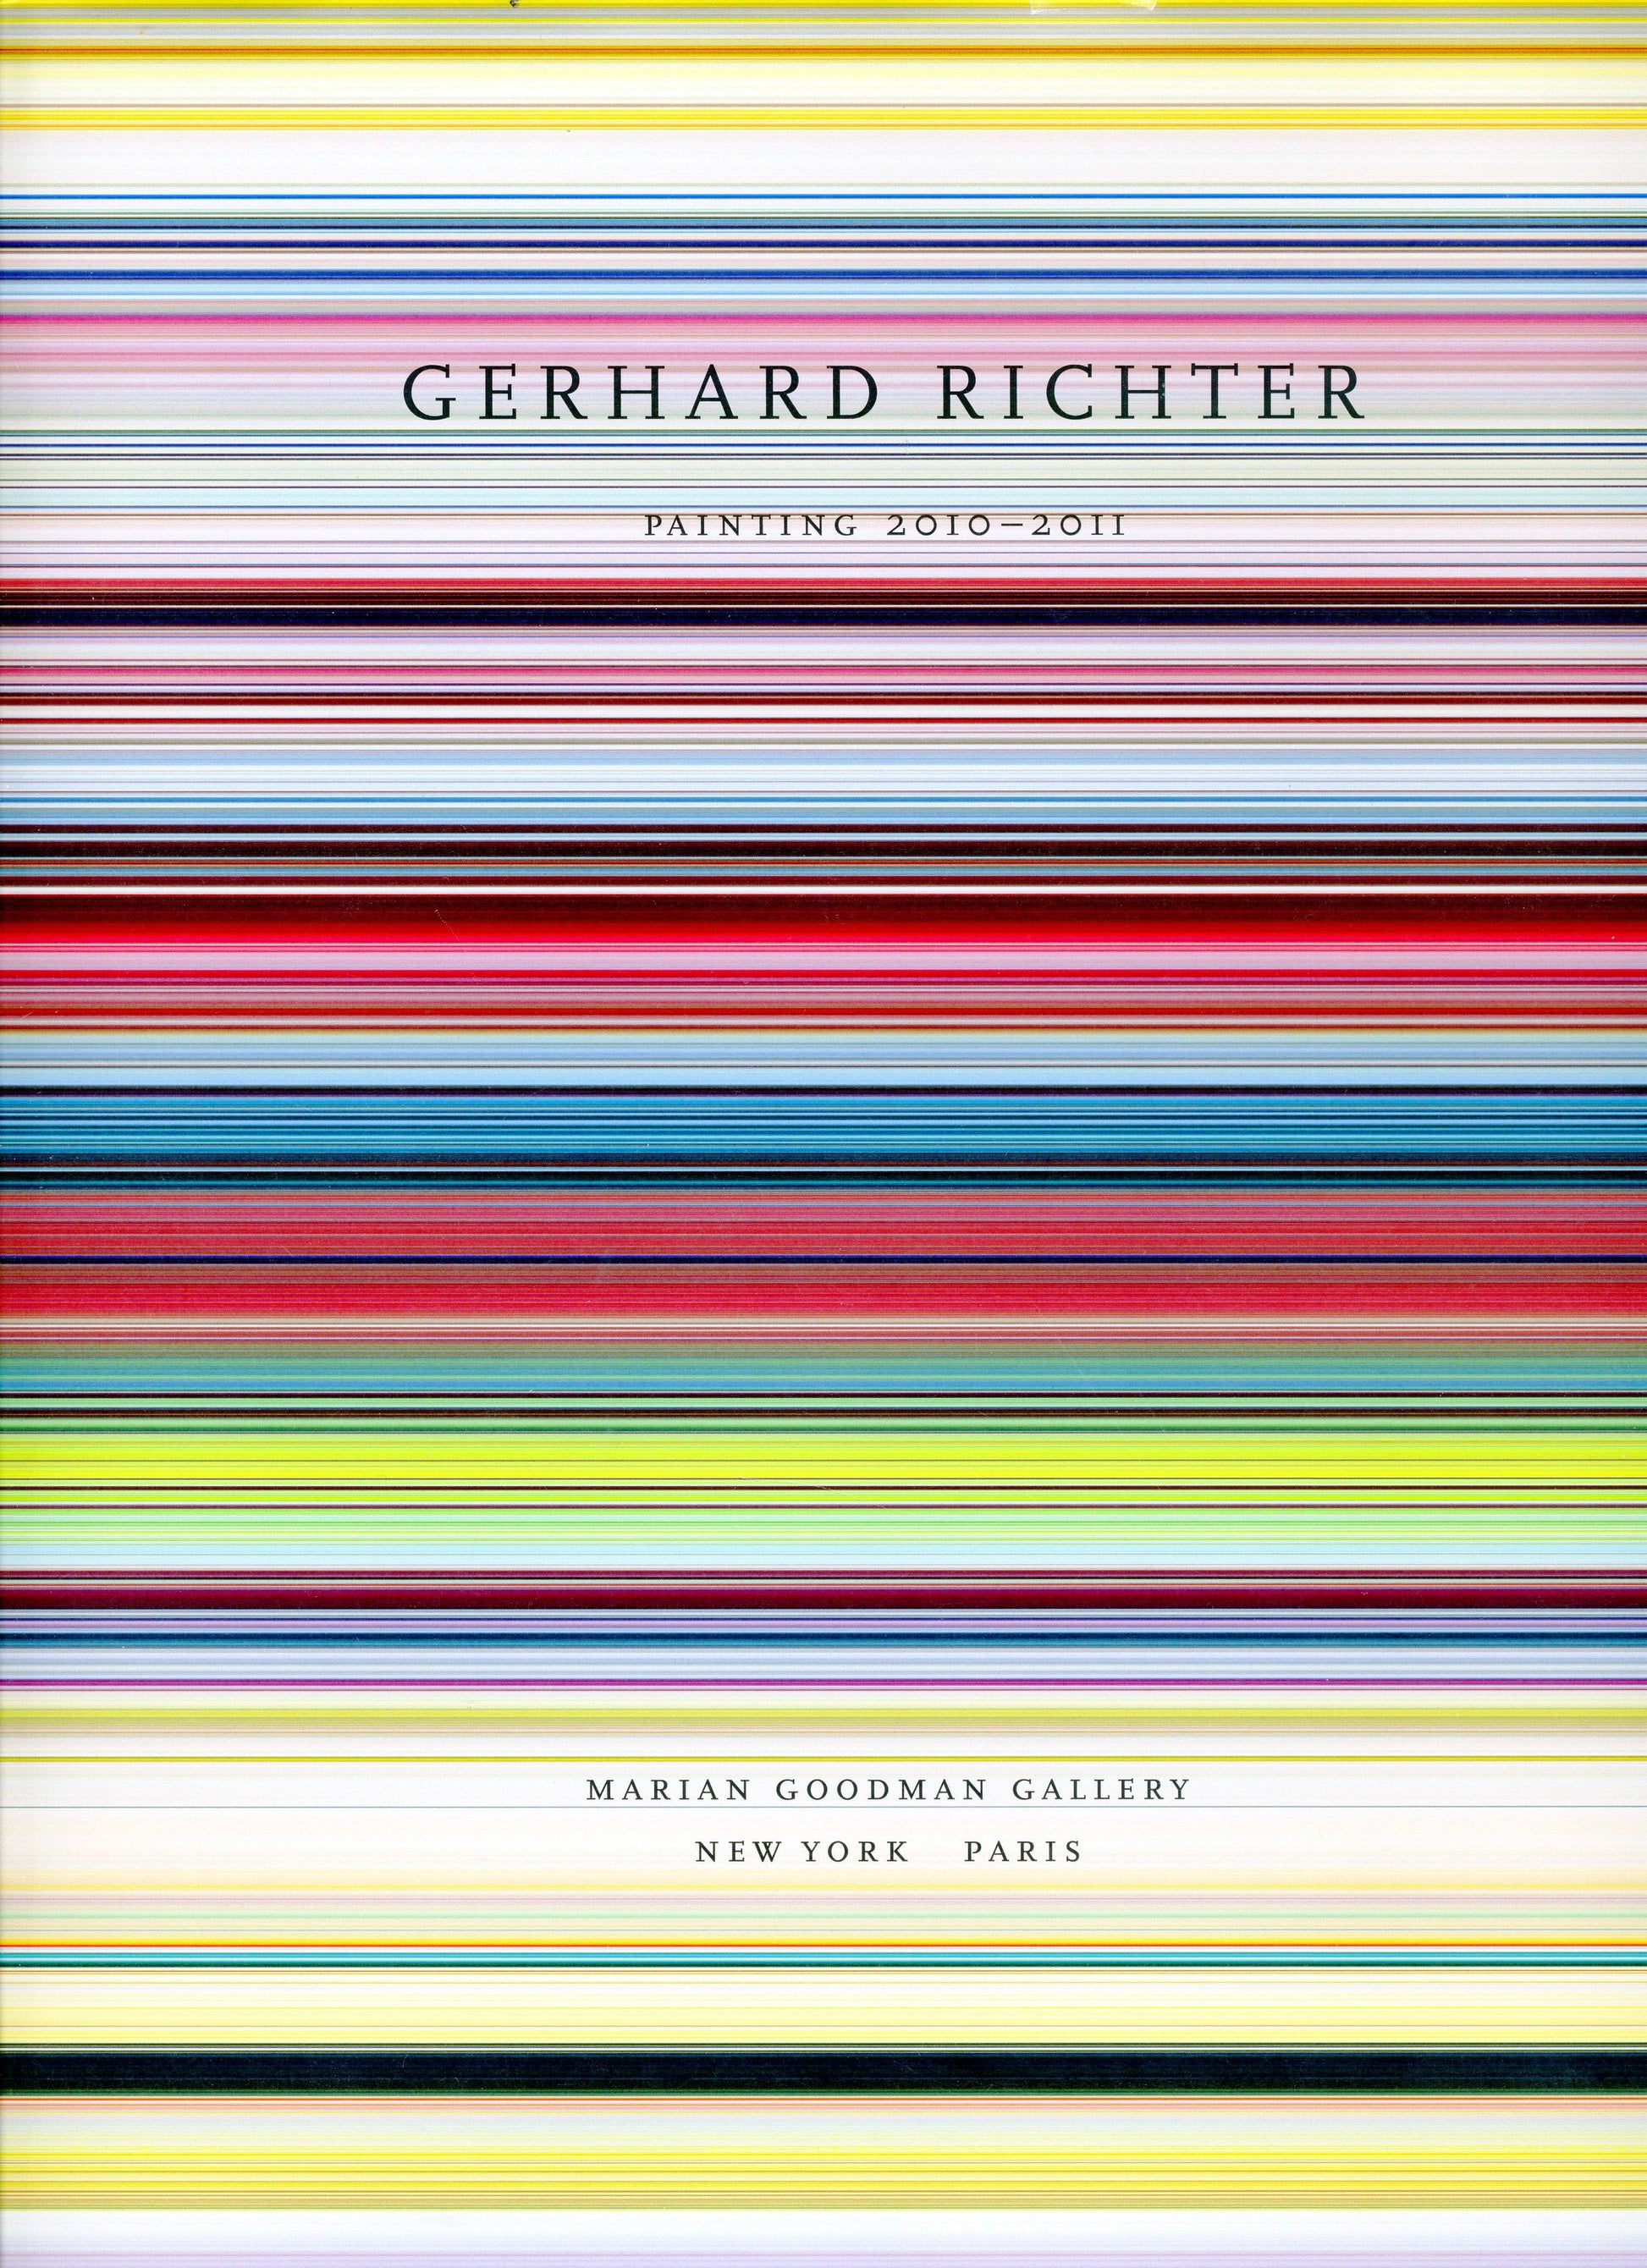 Gerhard Richter: Painting 2010-2011